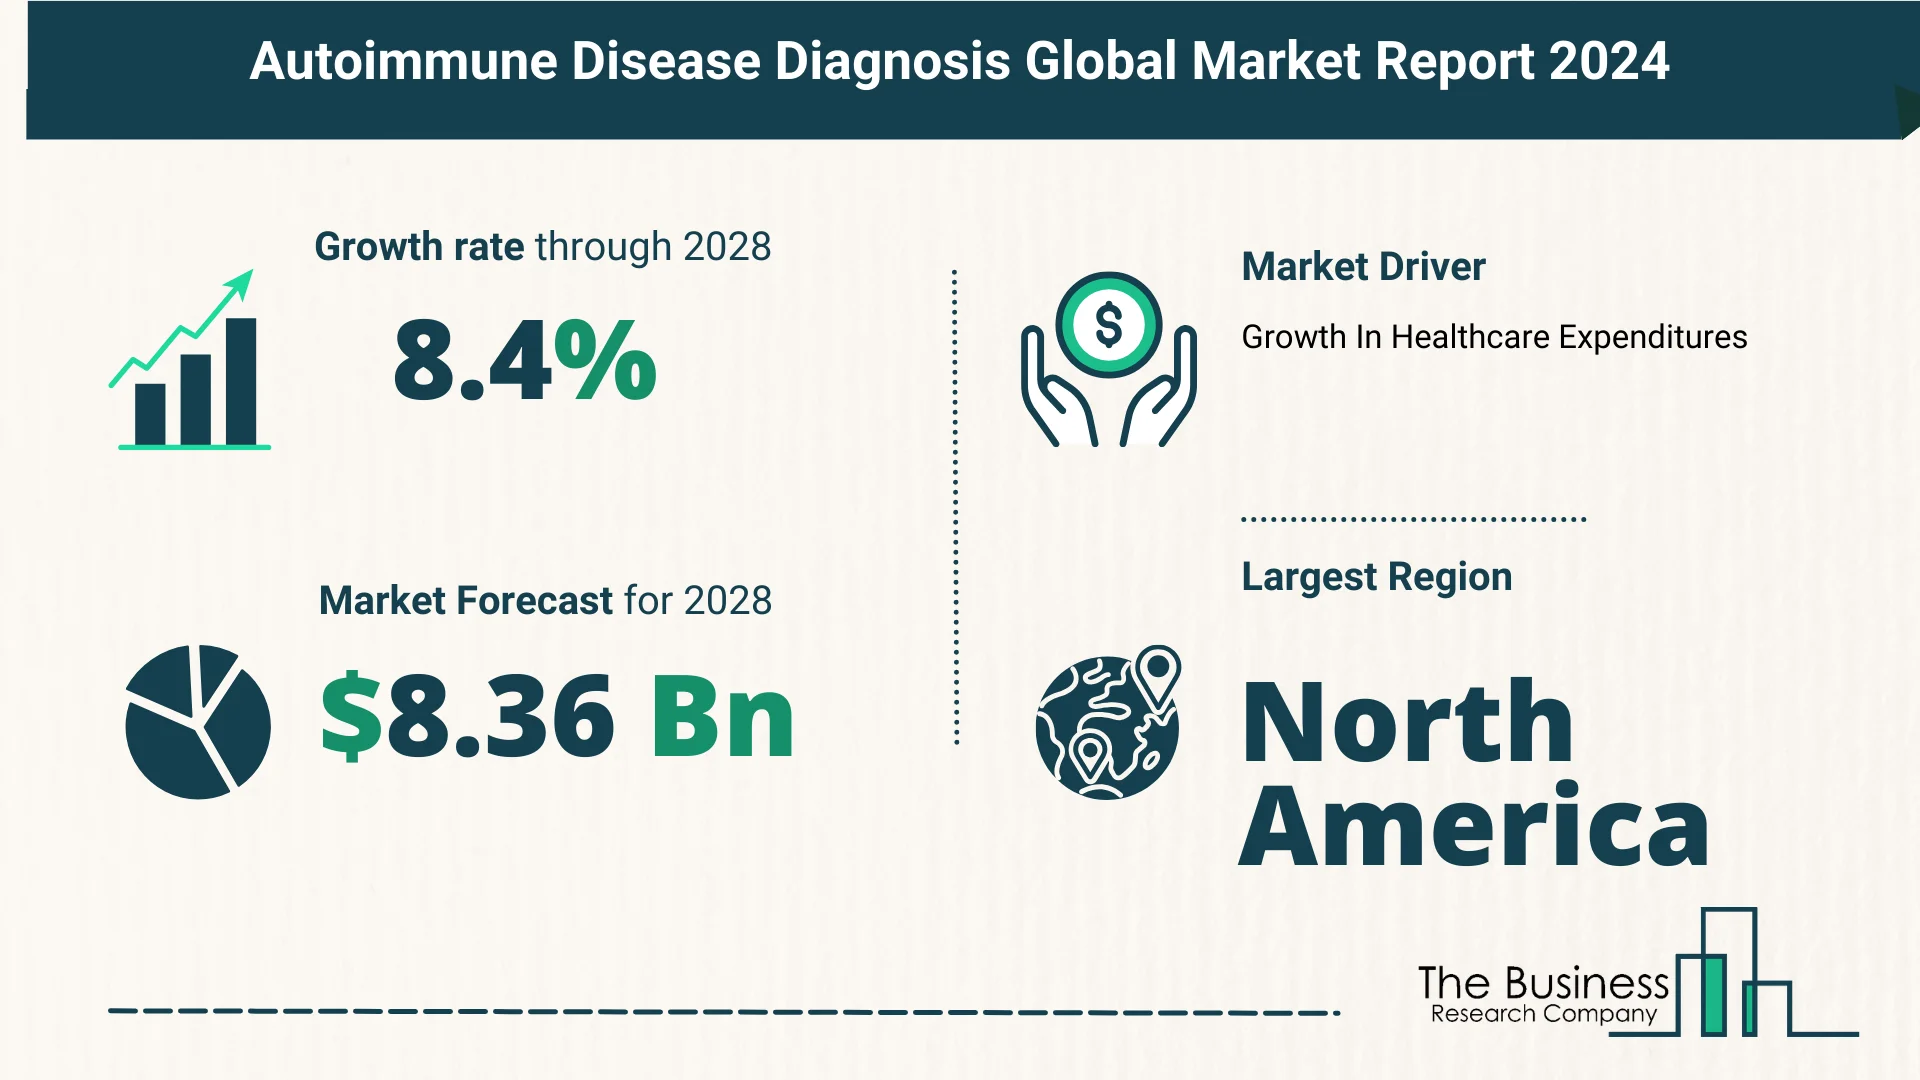 How Is The Autoimmune Disease Diagnosis Market Expected To Grow Through 2024-2033